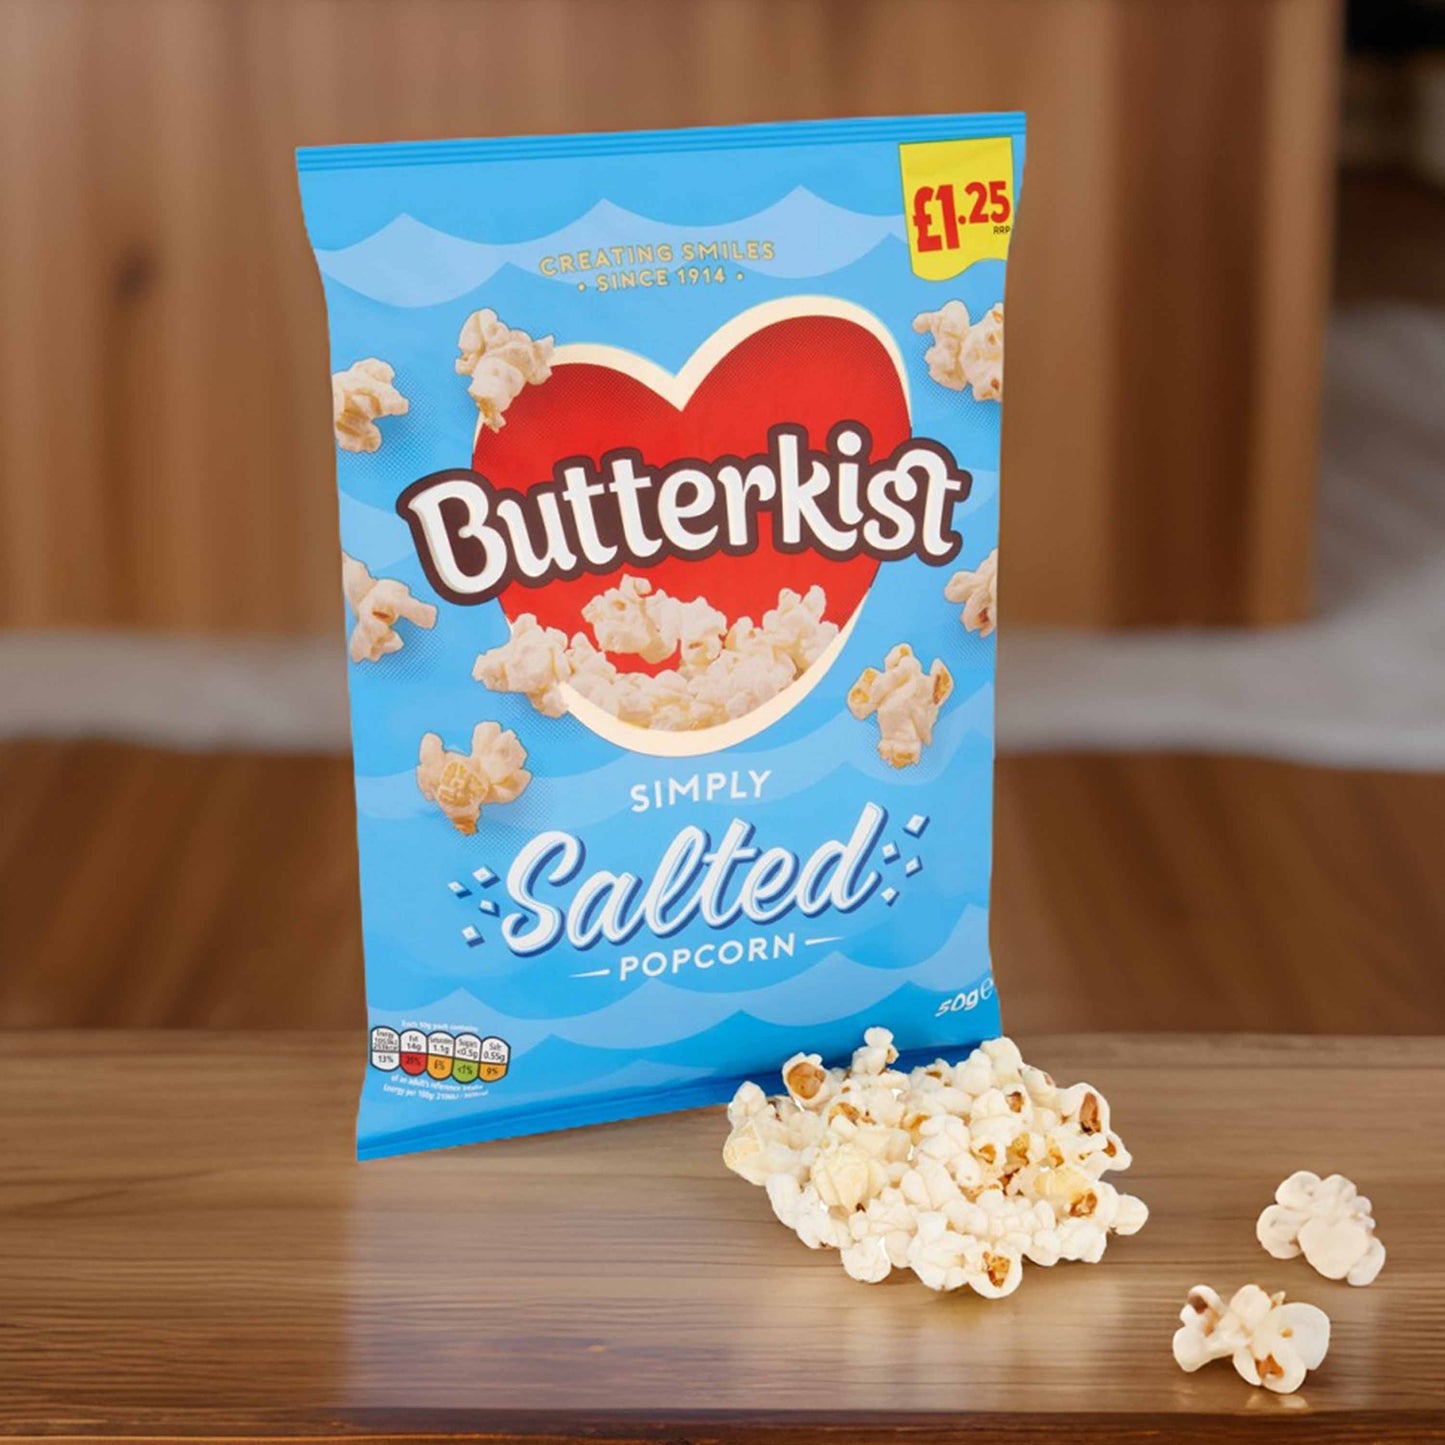 Butterkist Salted Popcorn 50g - (£1.25 Bag) - Classic British Popcorn